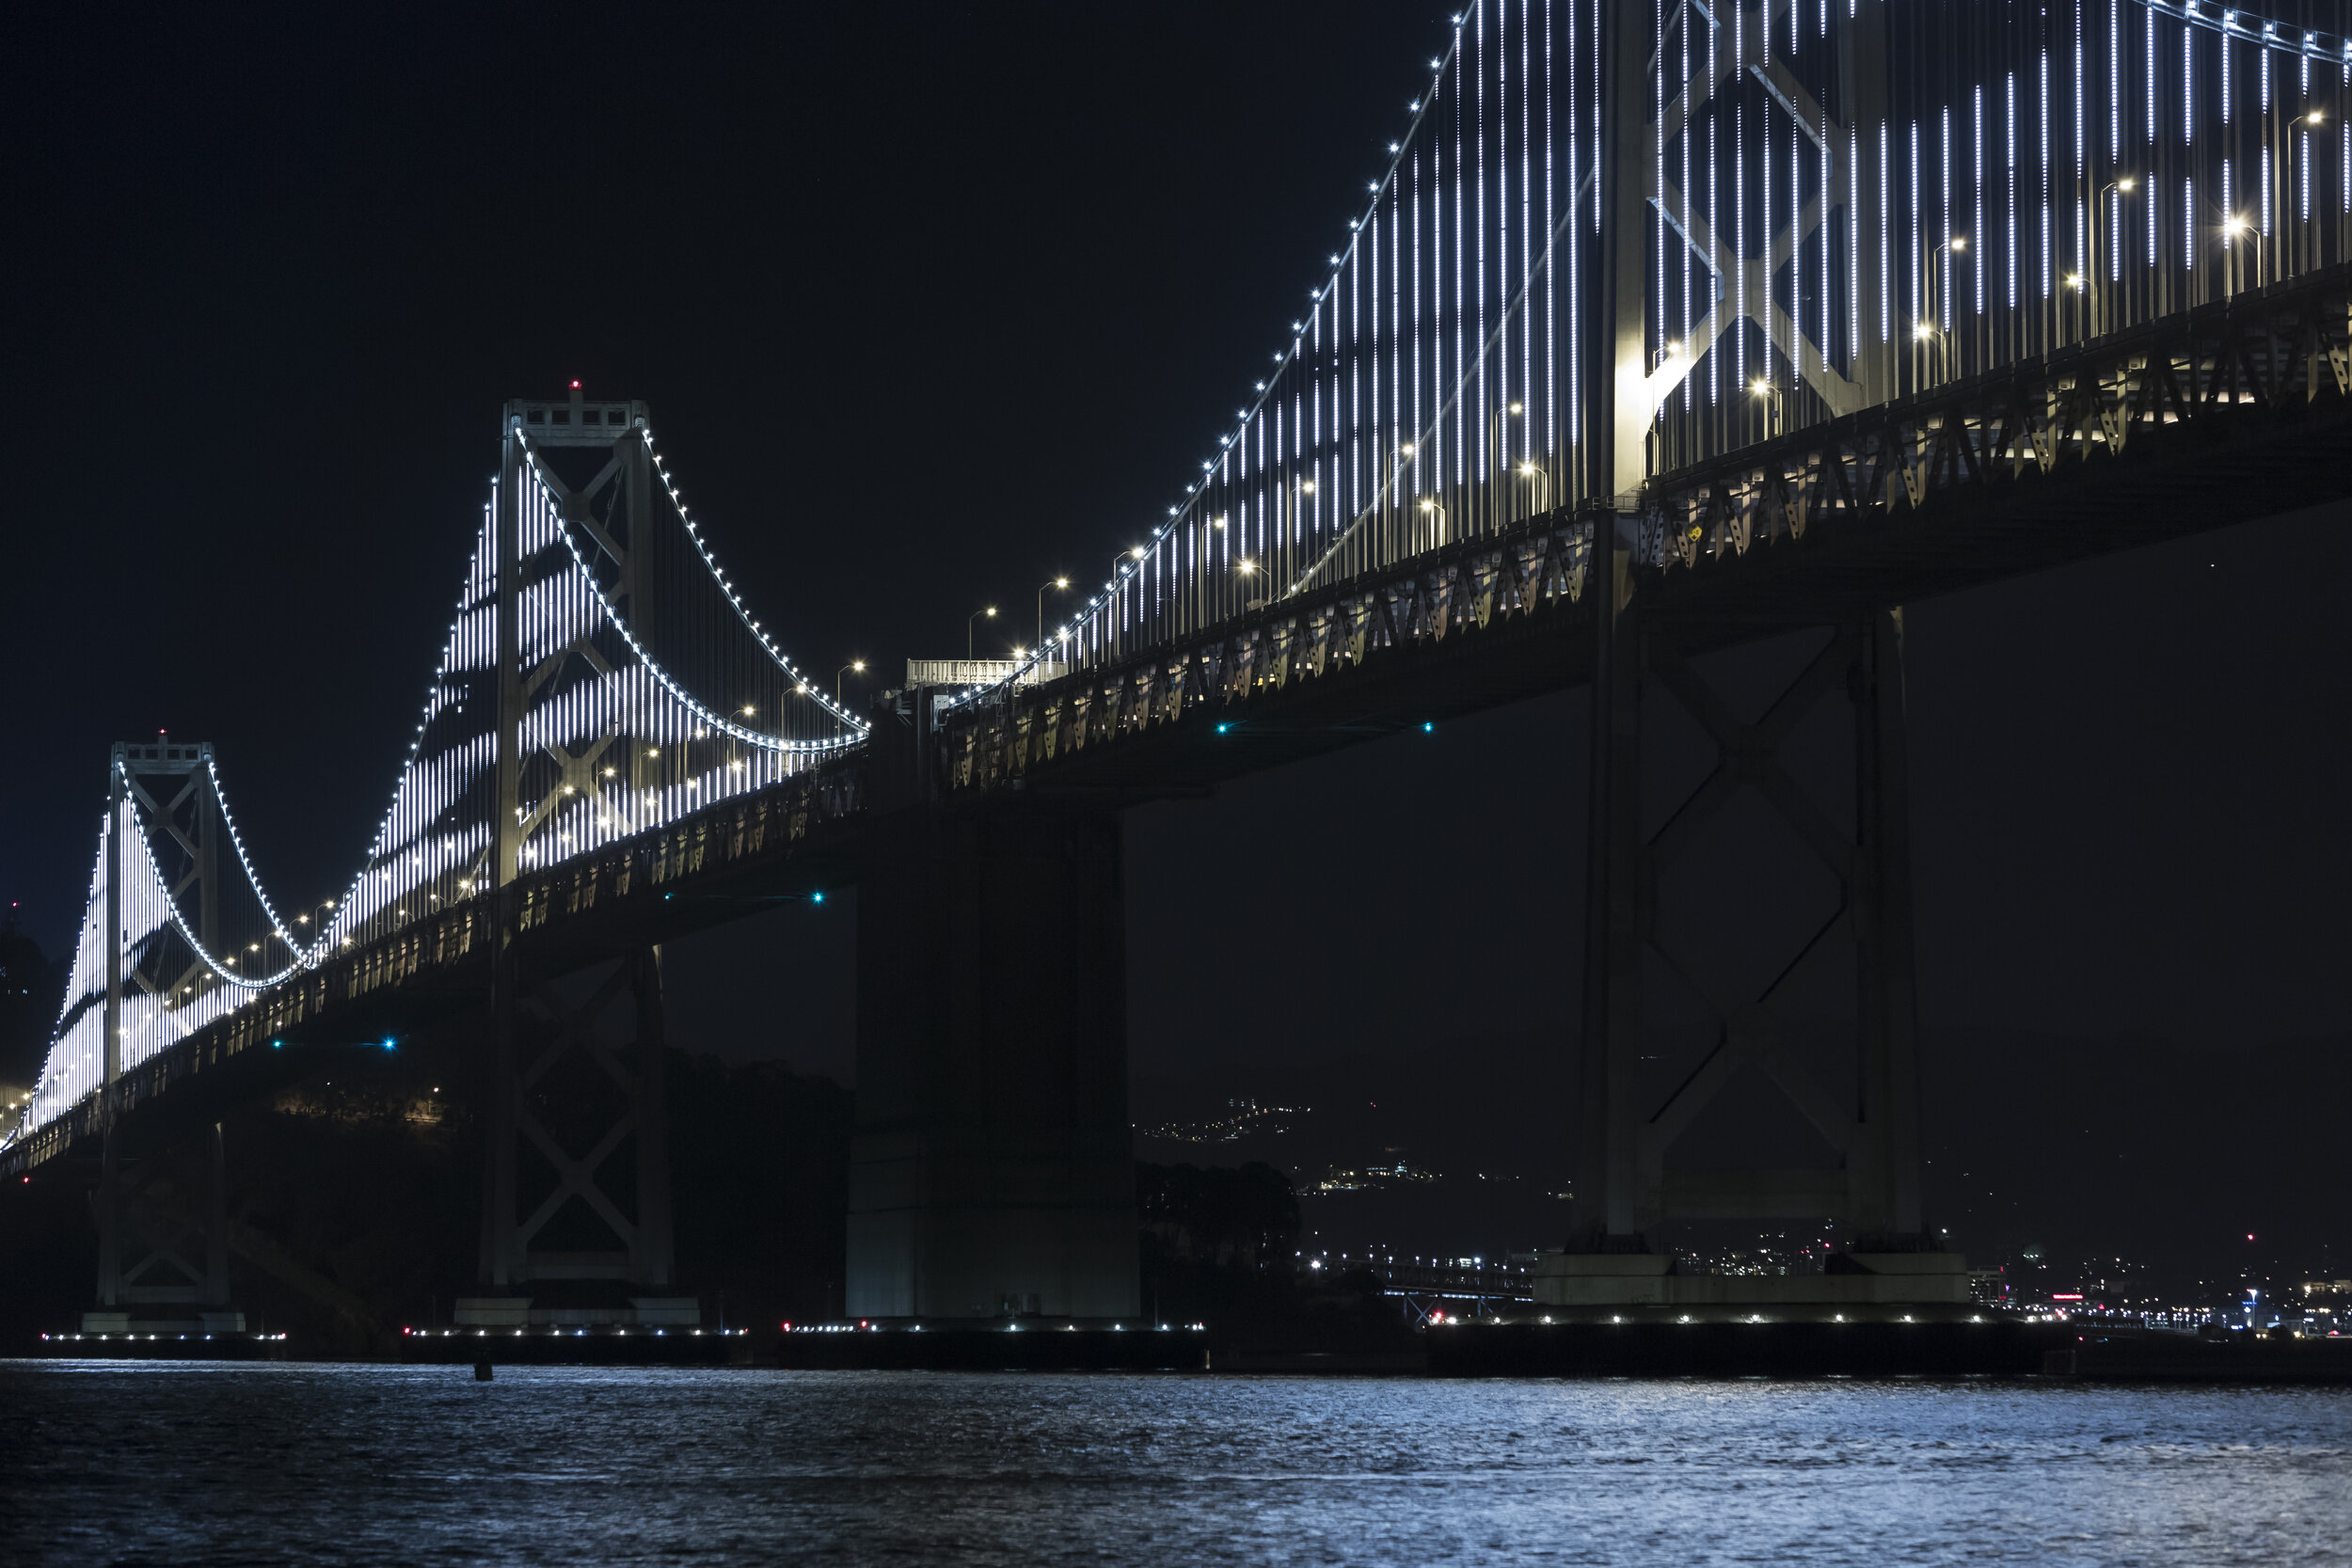 The Bay Lights, 2013 - The Bay Bridge, San Francisco, CA